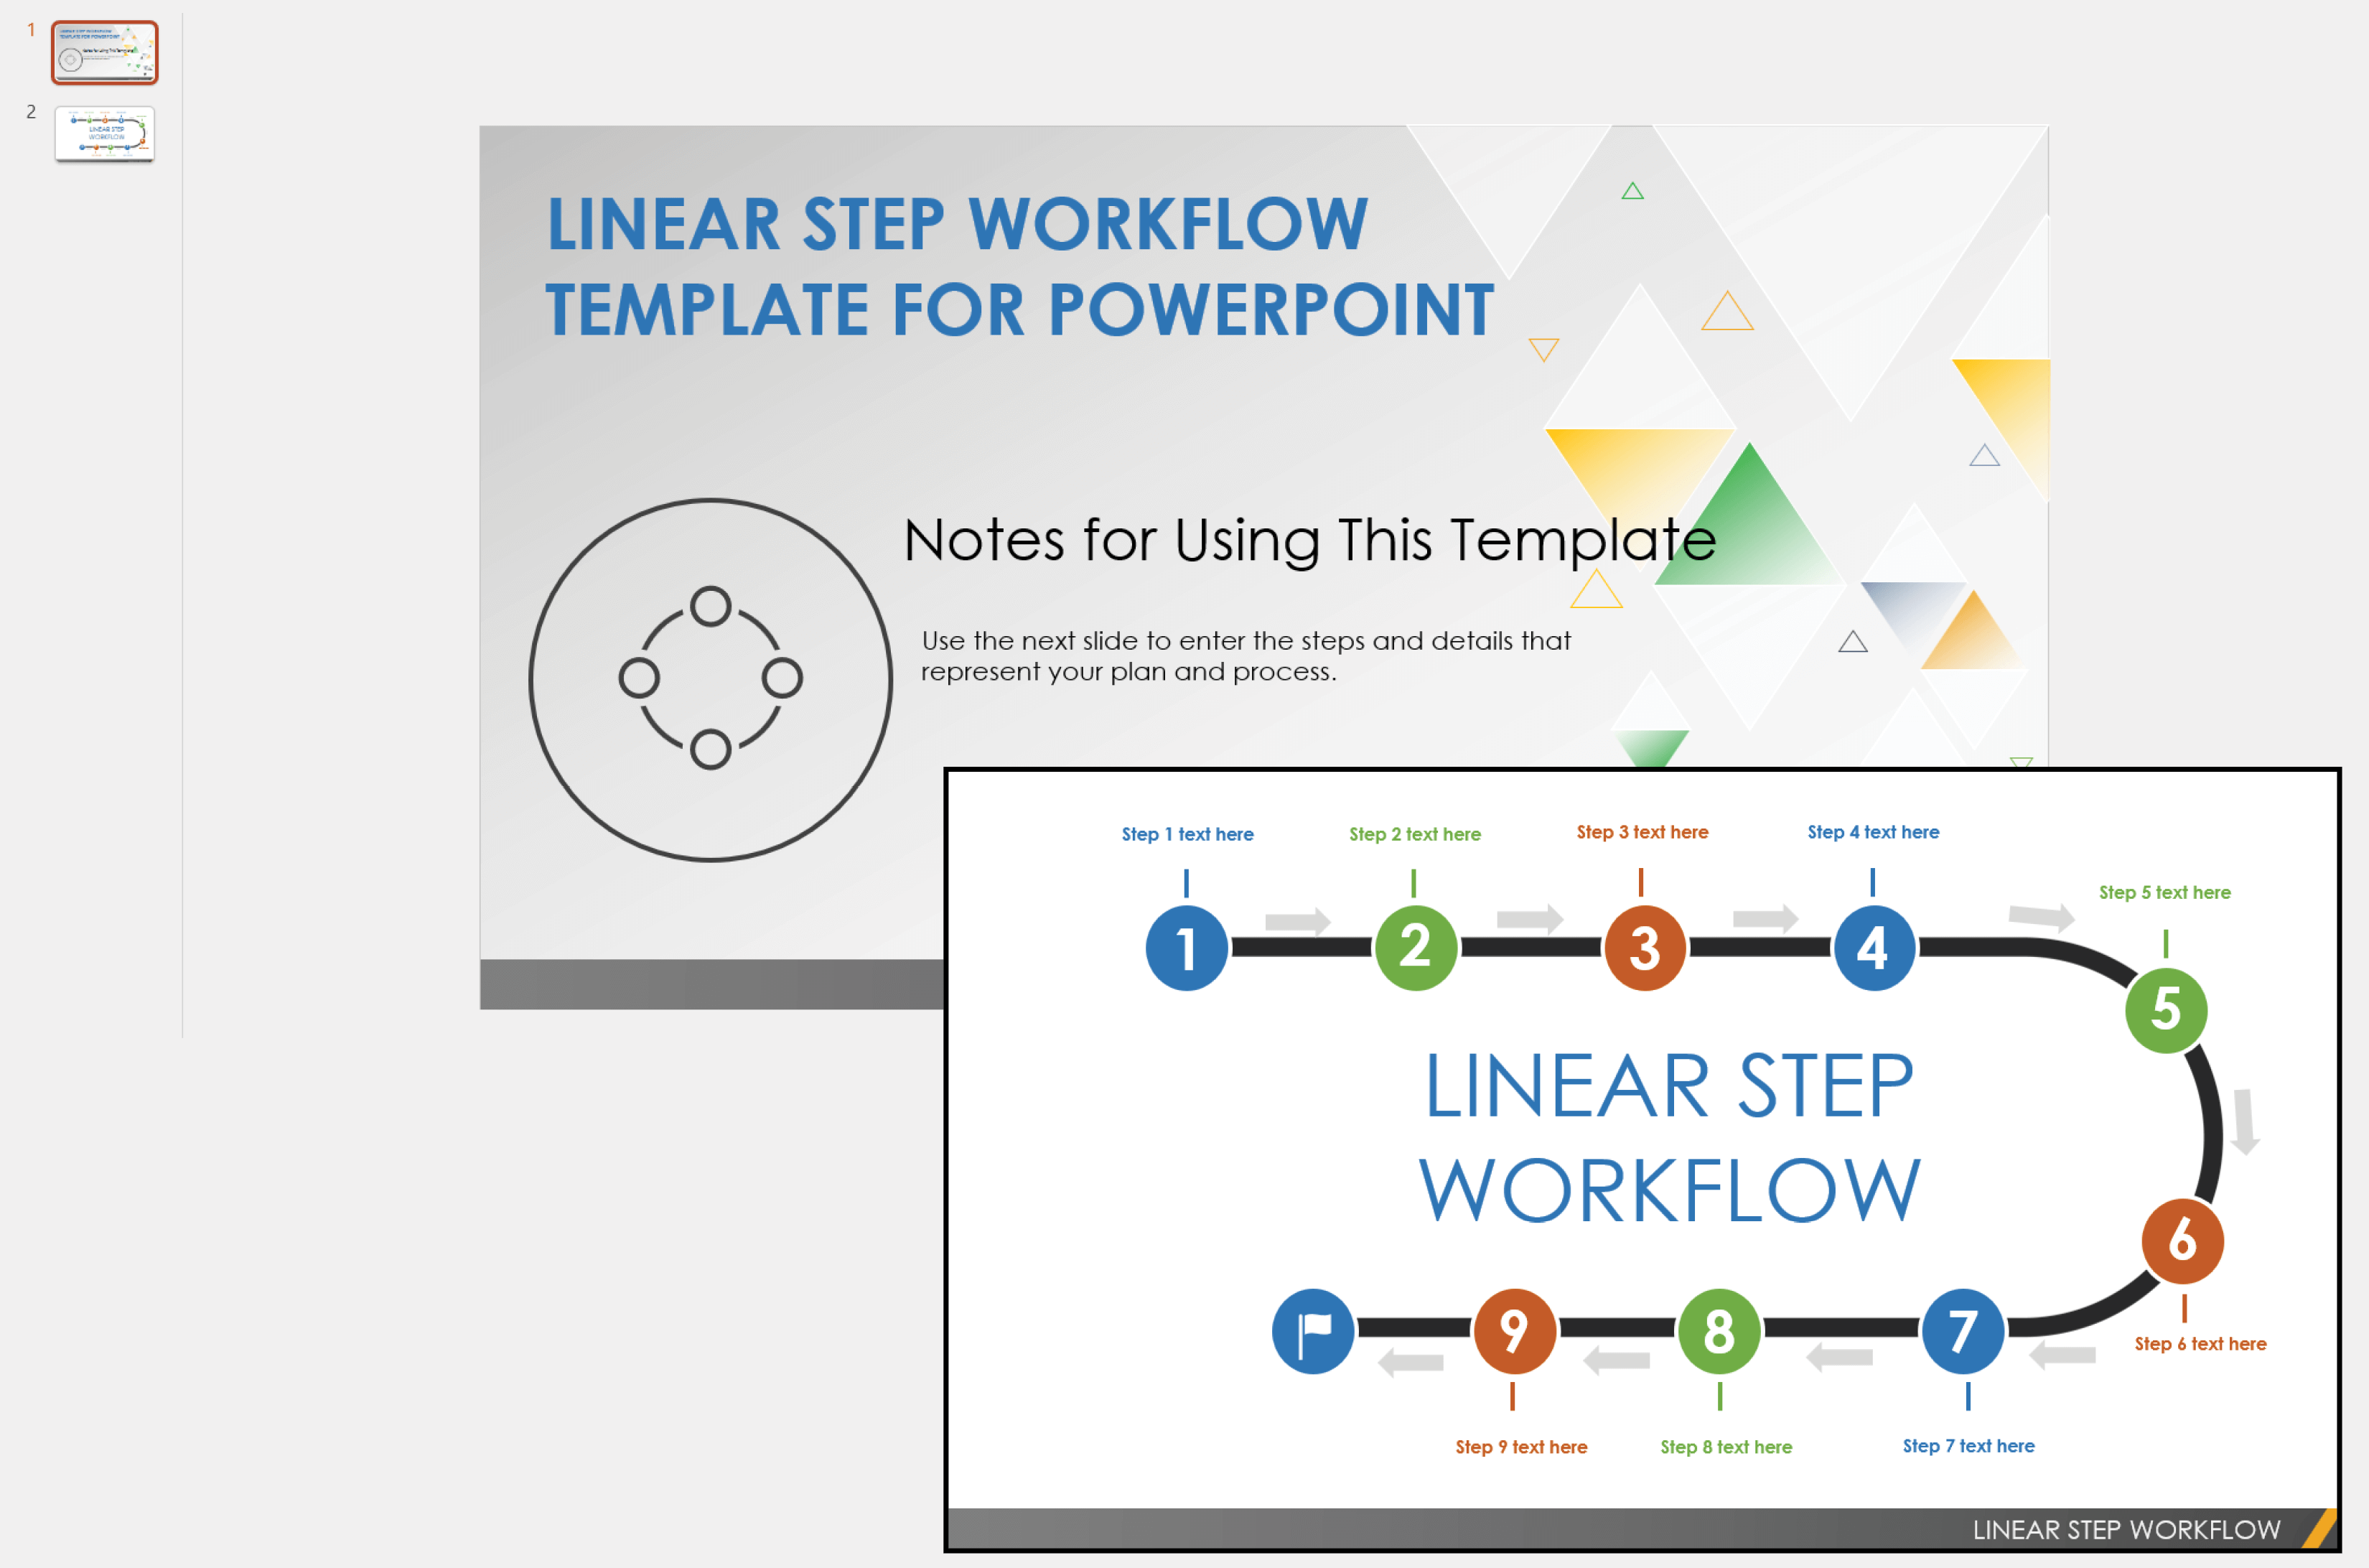 Free Workflow Templates For Powerpoint Smartsheet